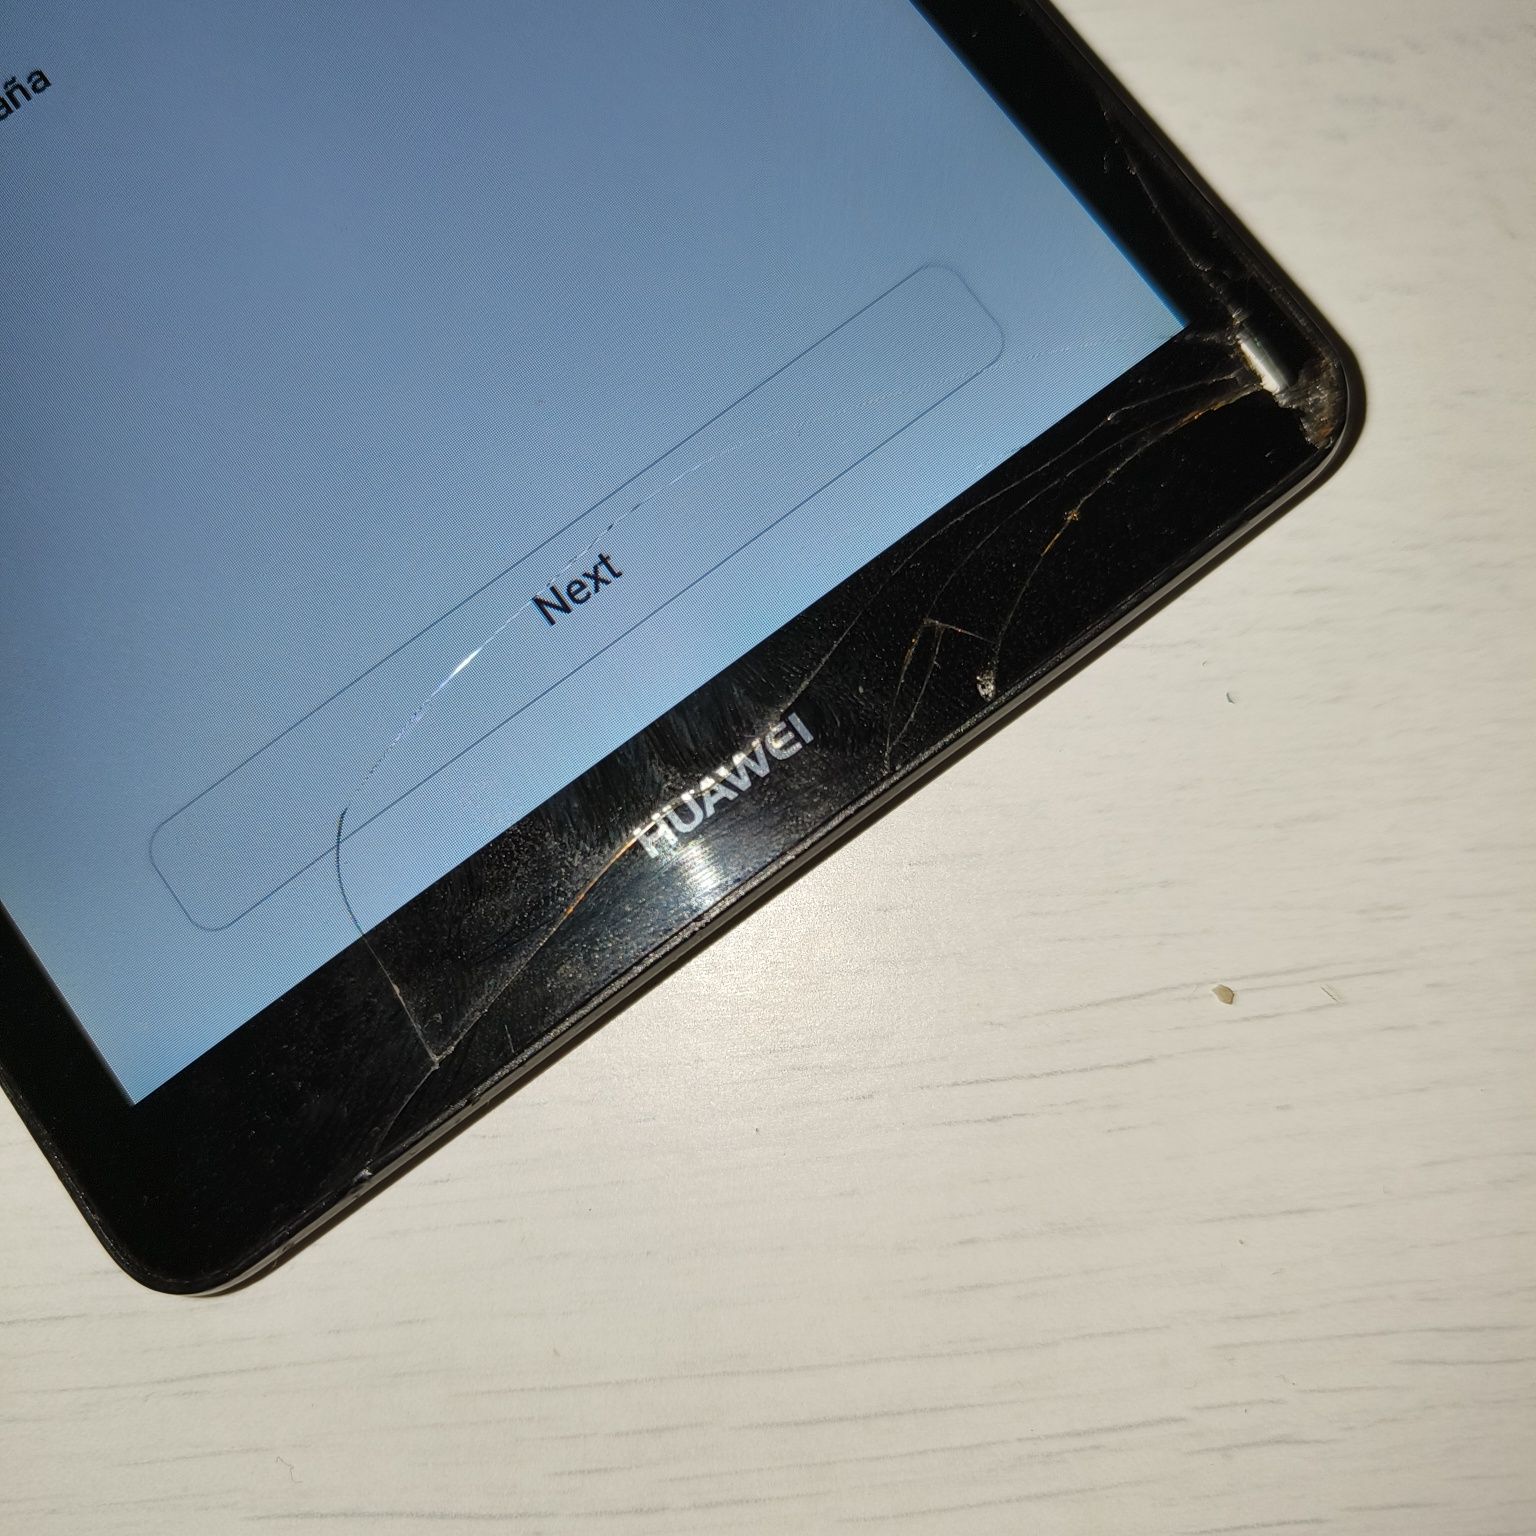 Huawei Mediapad T3 7"